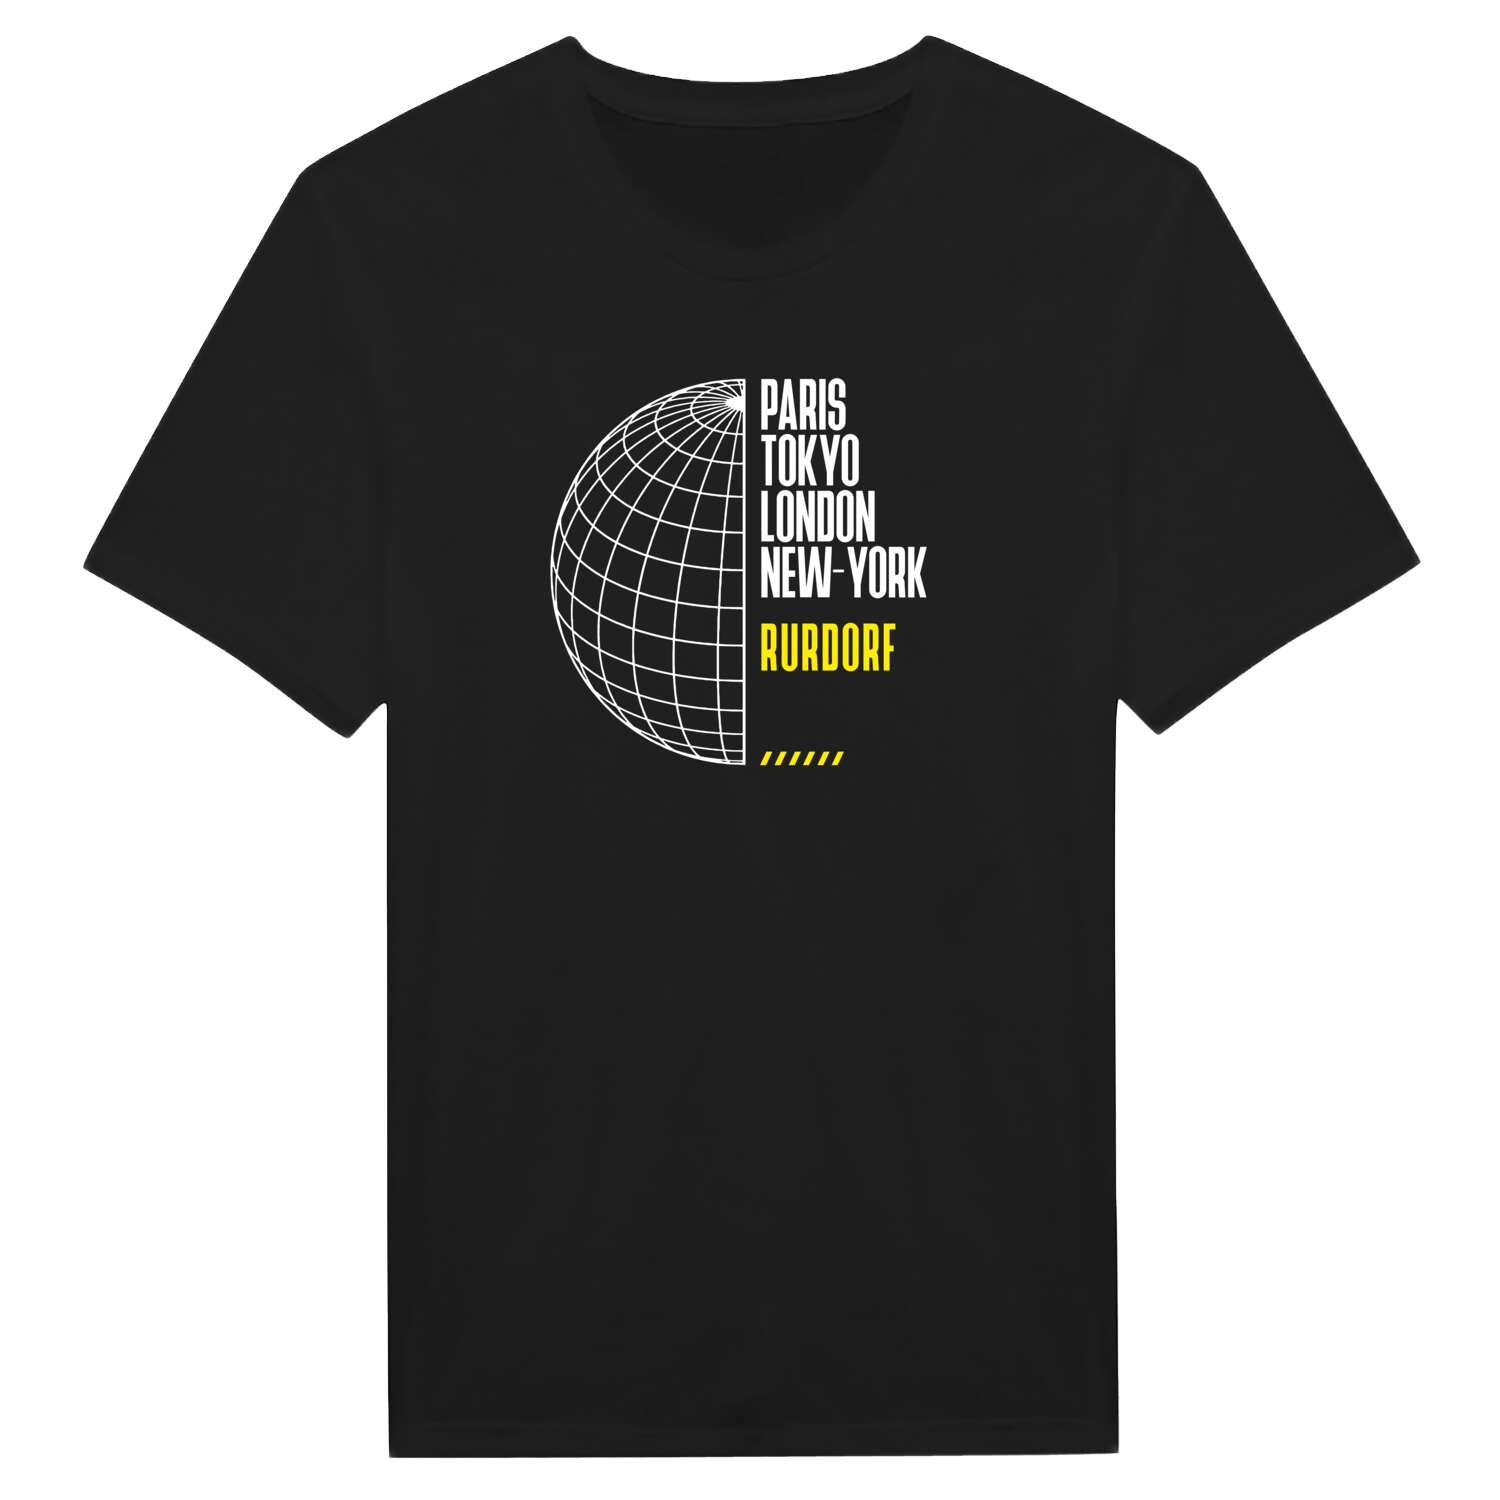 Rurdorf T-Shirt »Paris Tokyo London«